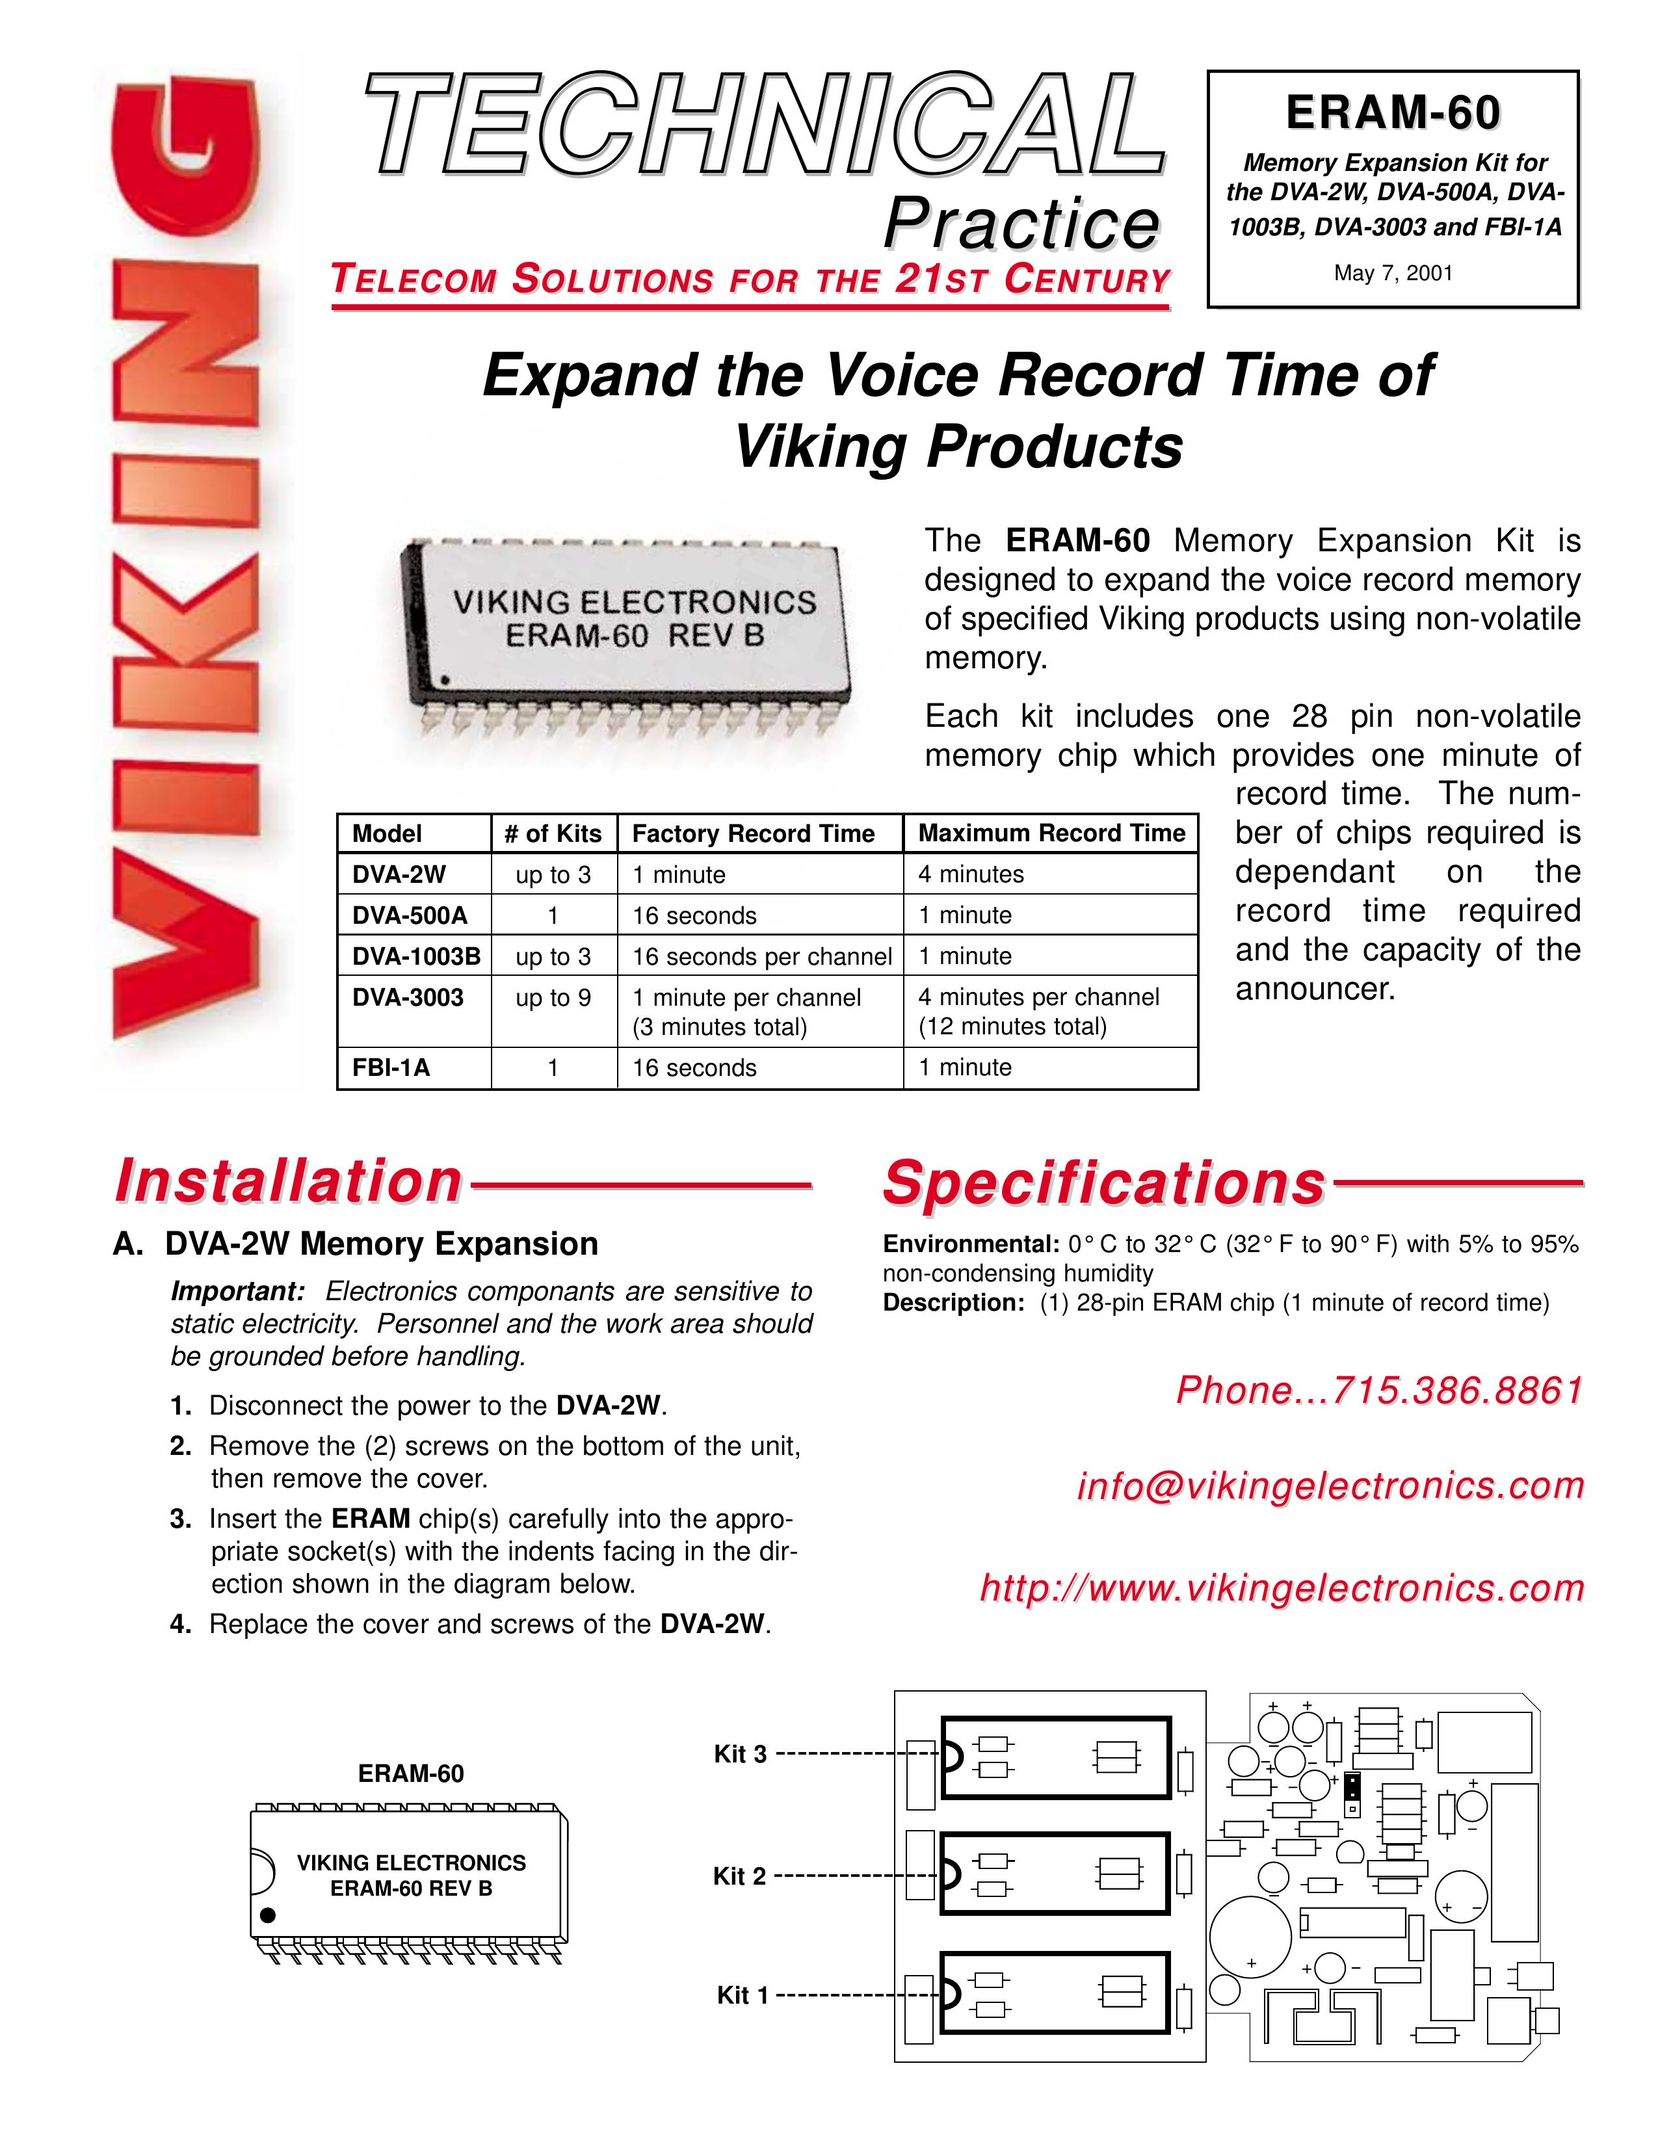 Viking Electronics DVA-3003 Video Gaming Accessories User Manual